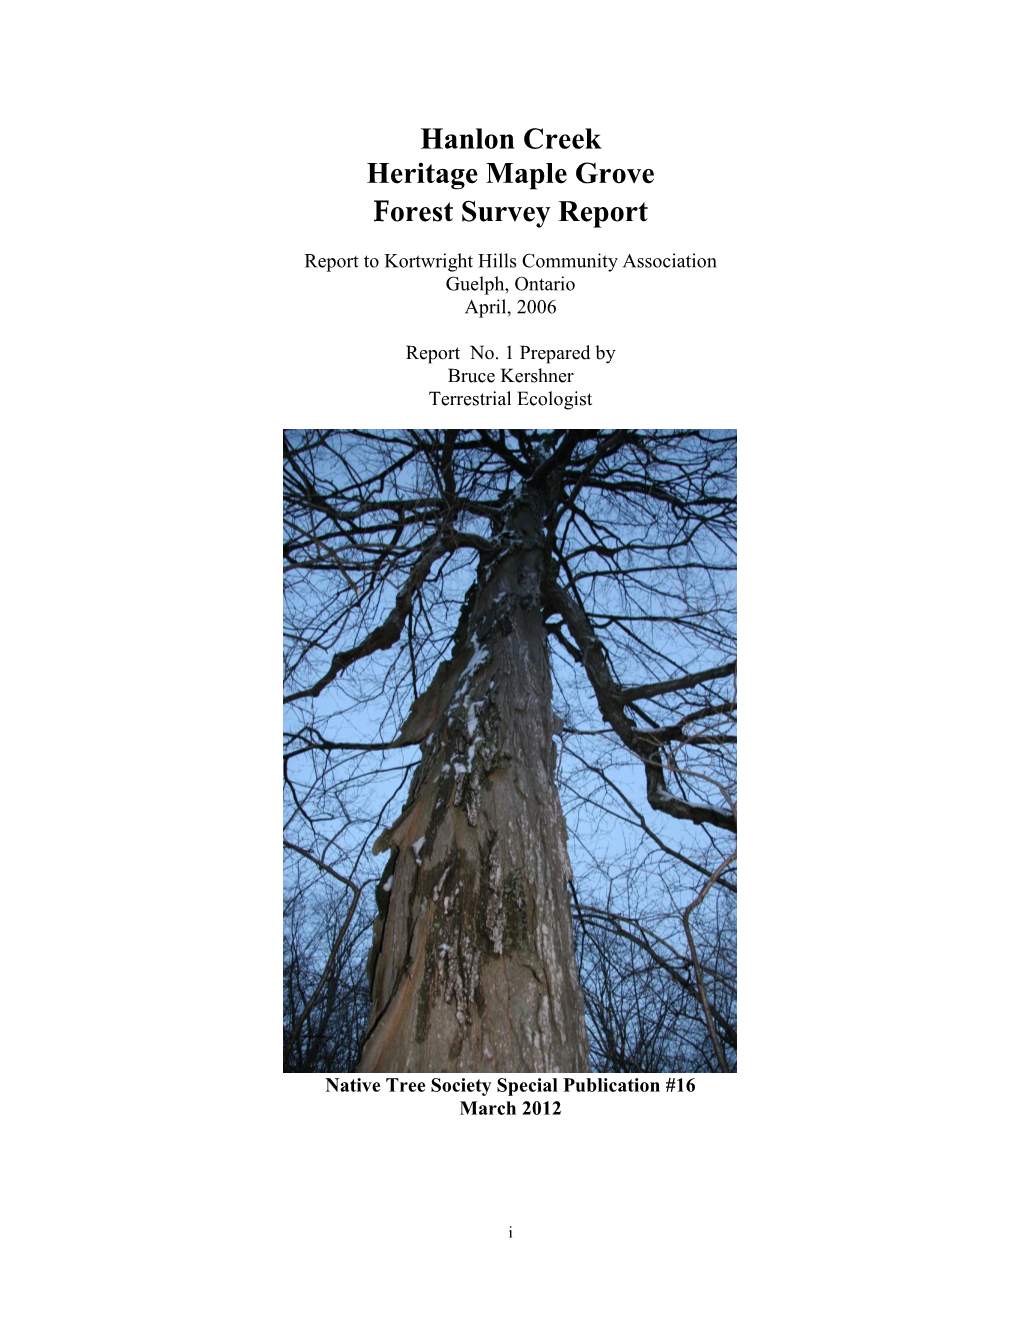 Hanlon Creek Heritage Maple Grove Forest Survey Report